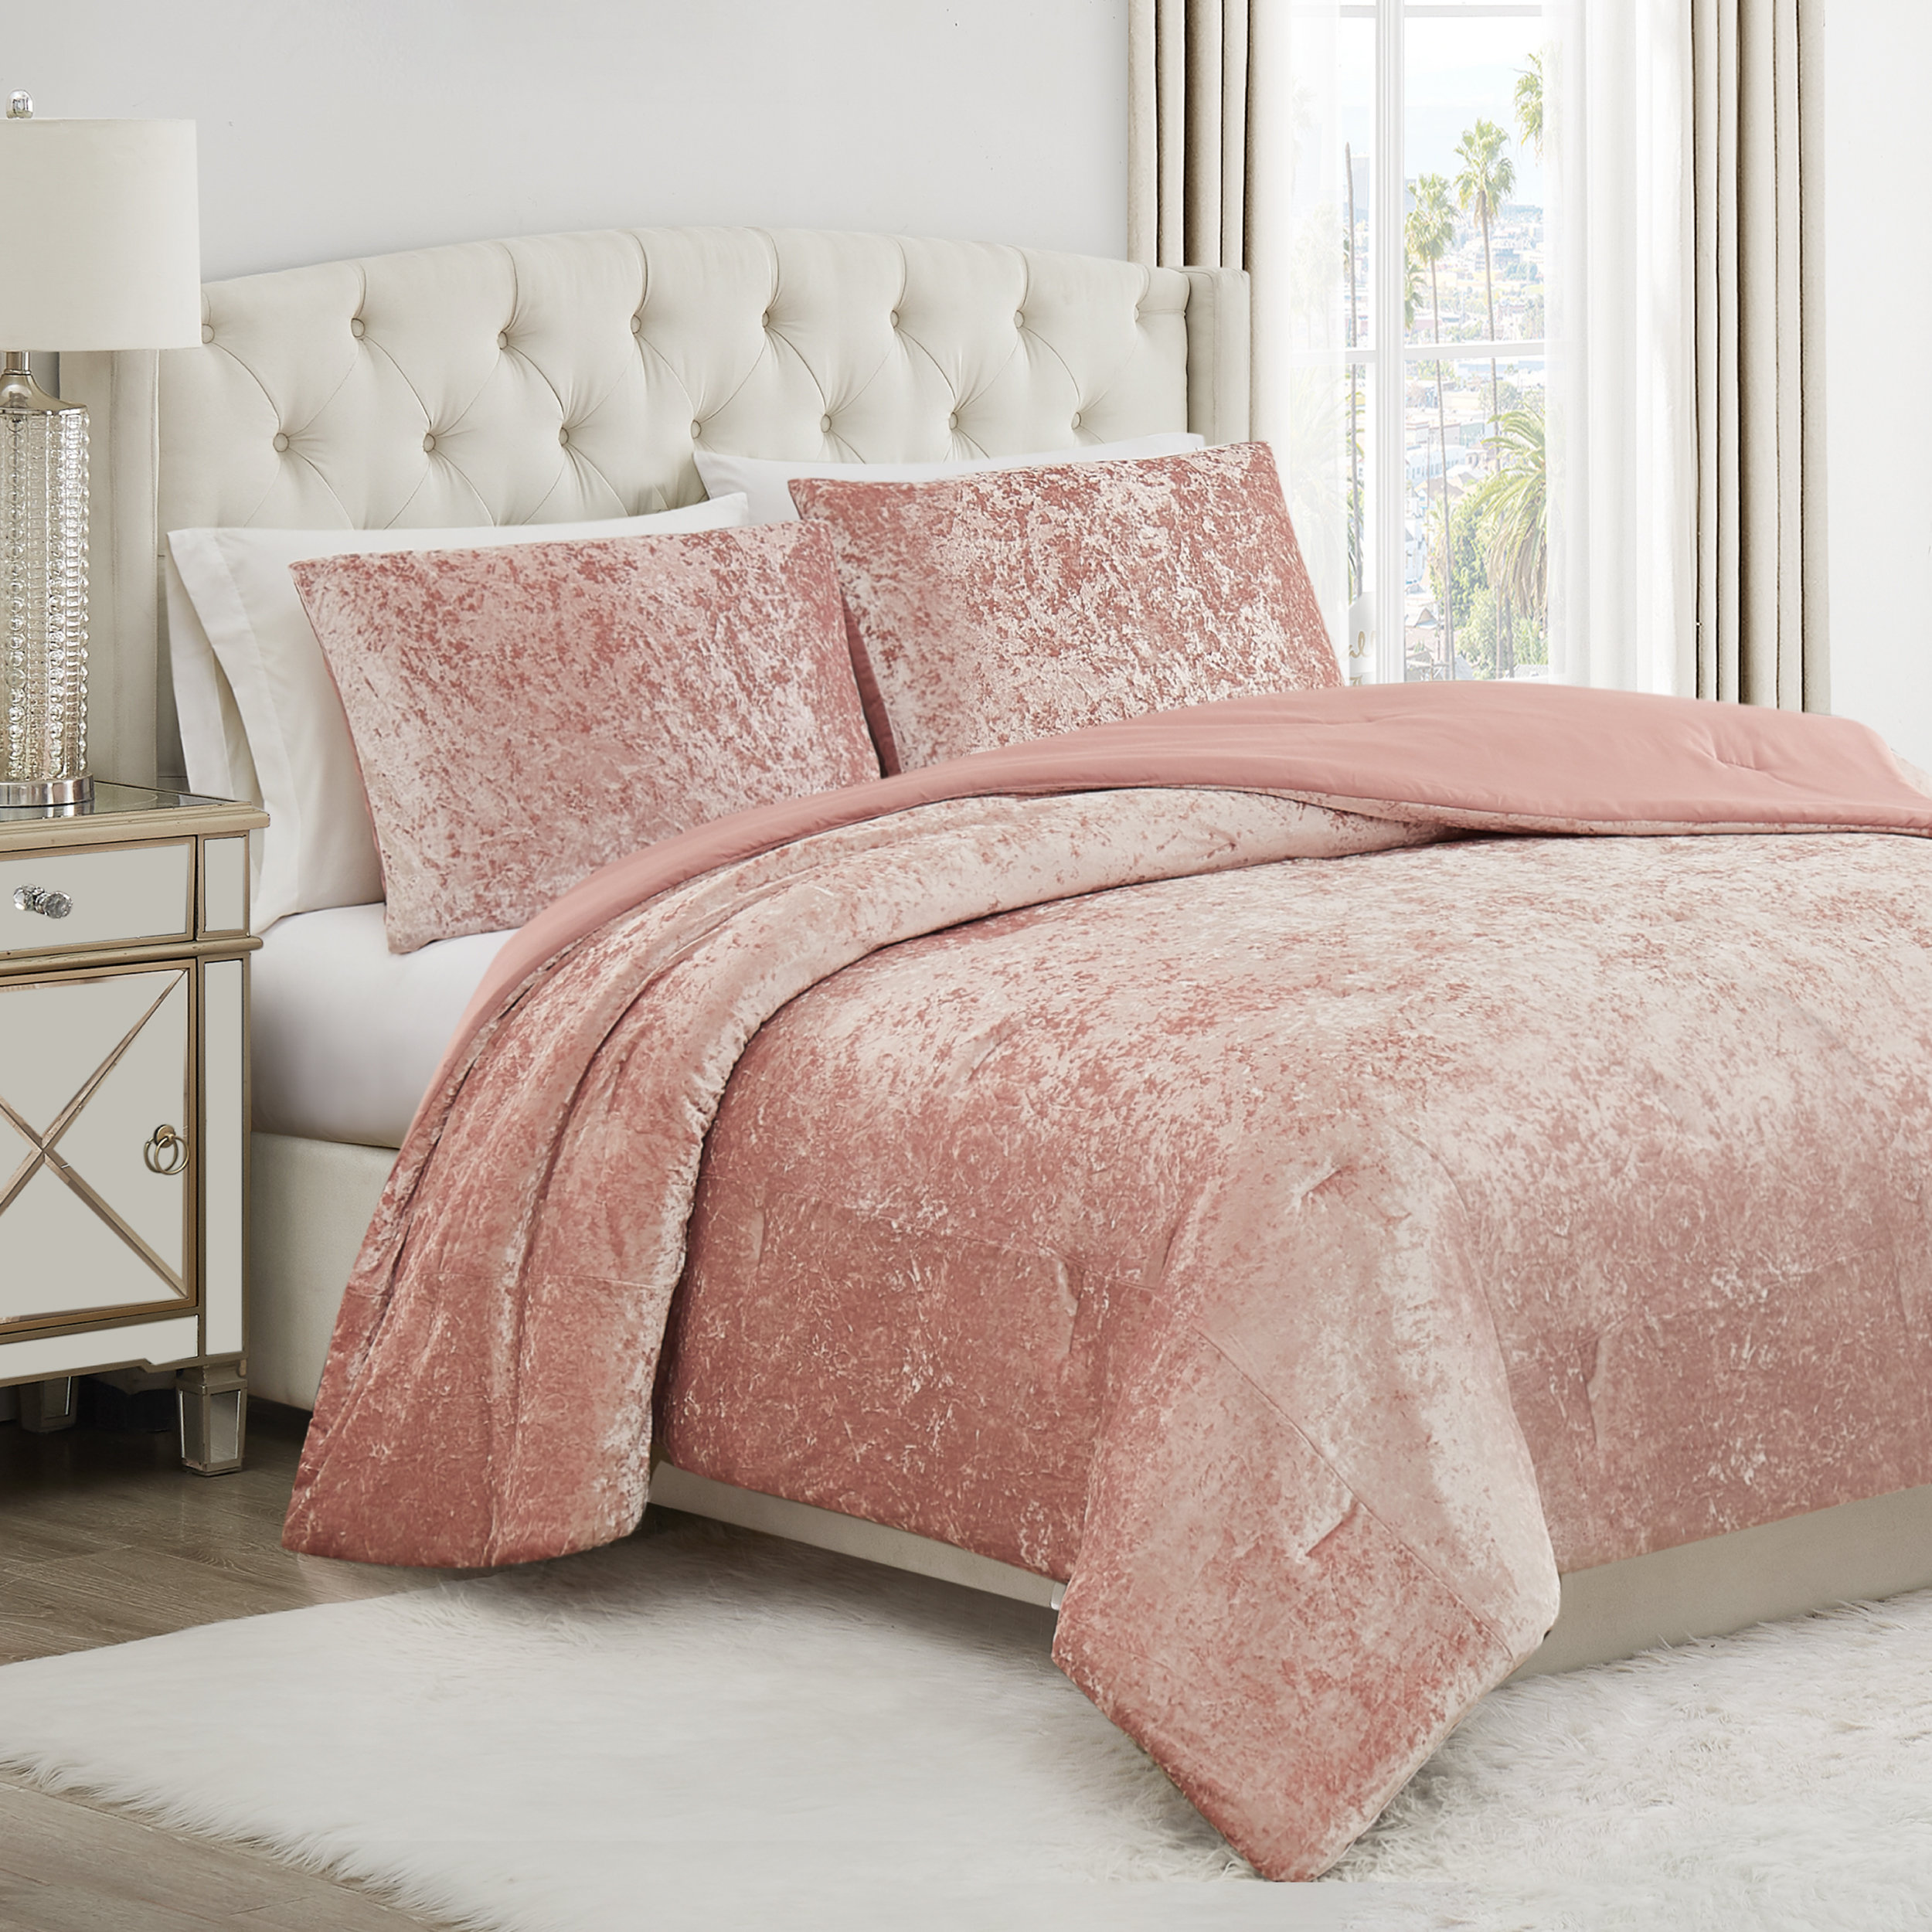 Juicy Couture Regent Leopard 3-Piece King Comforter Set - White/Pink/Black